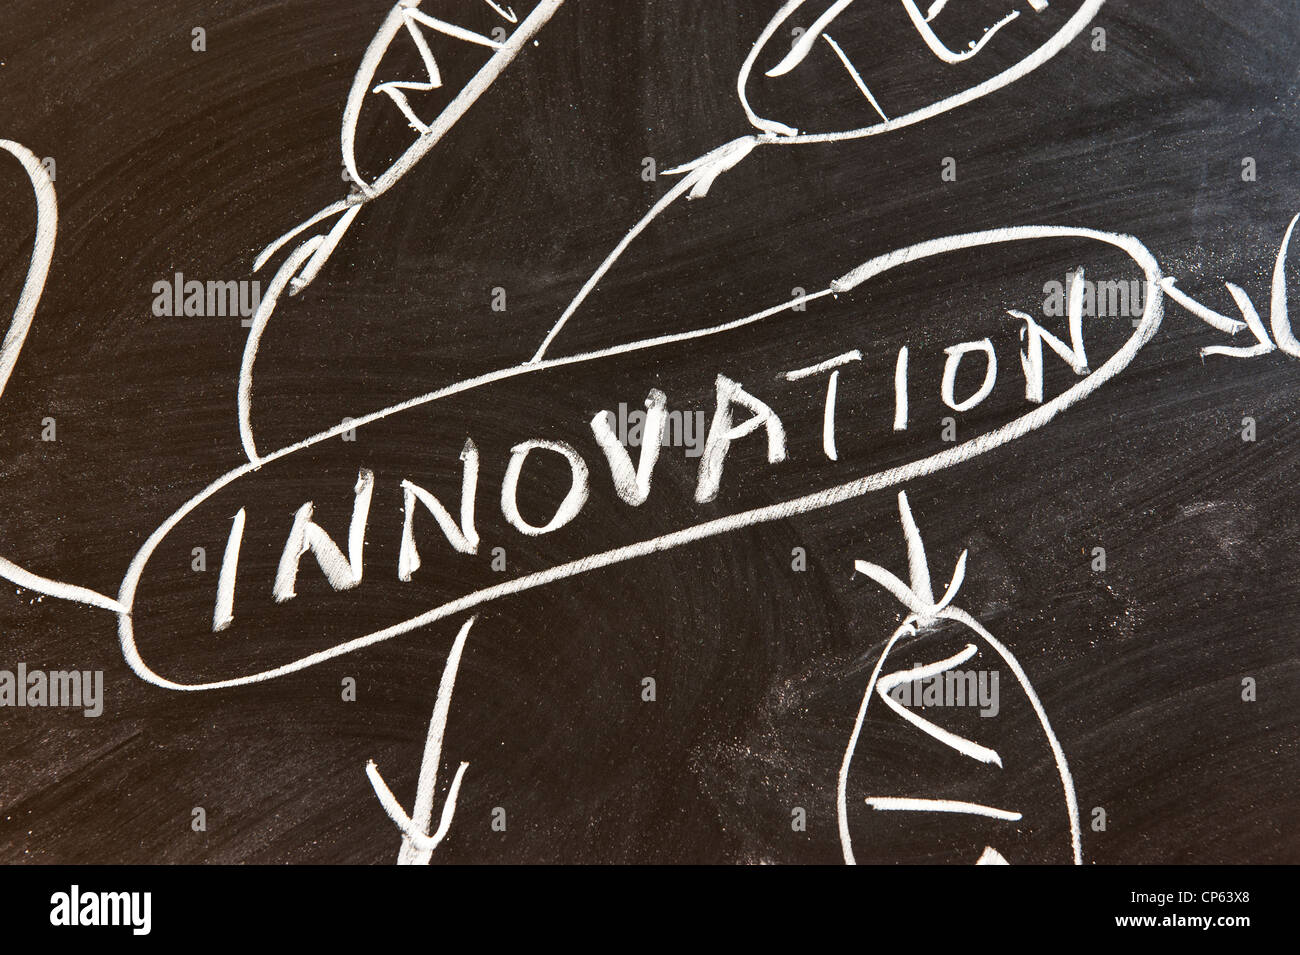 Innovation concept diagram drawn on chalkboard Stock Photo